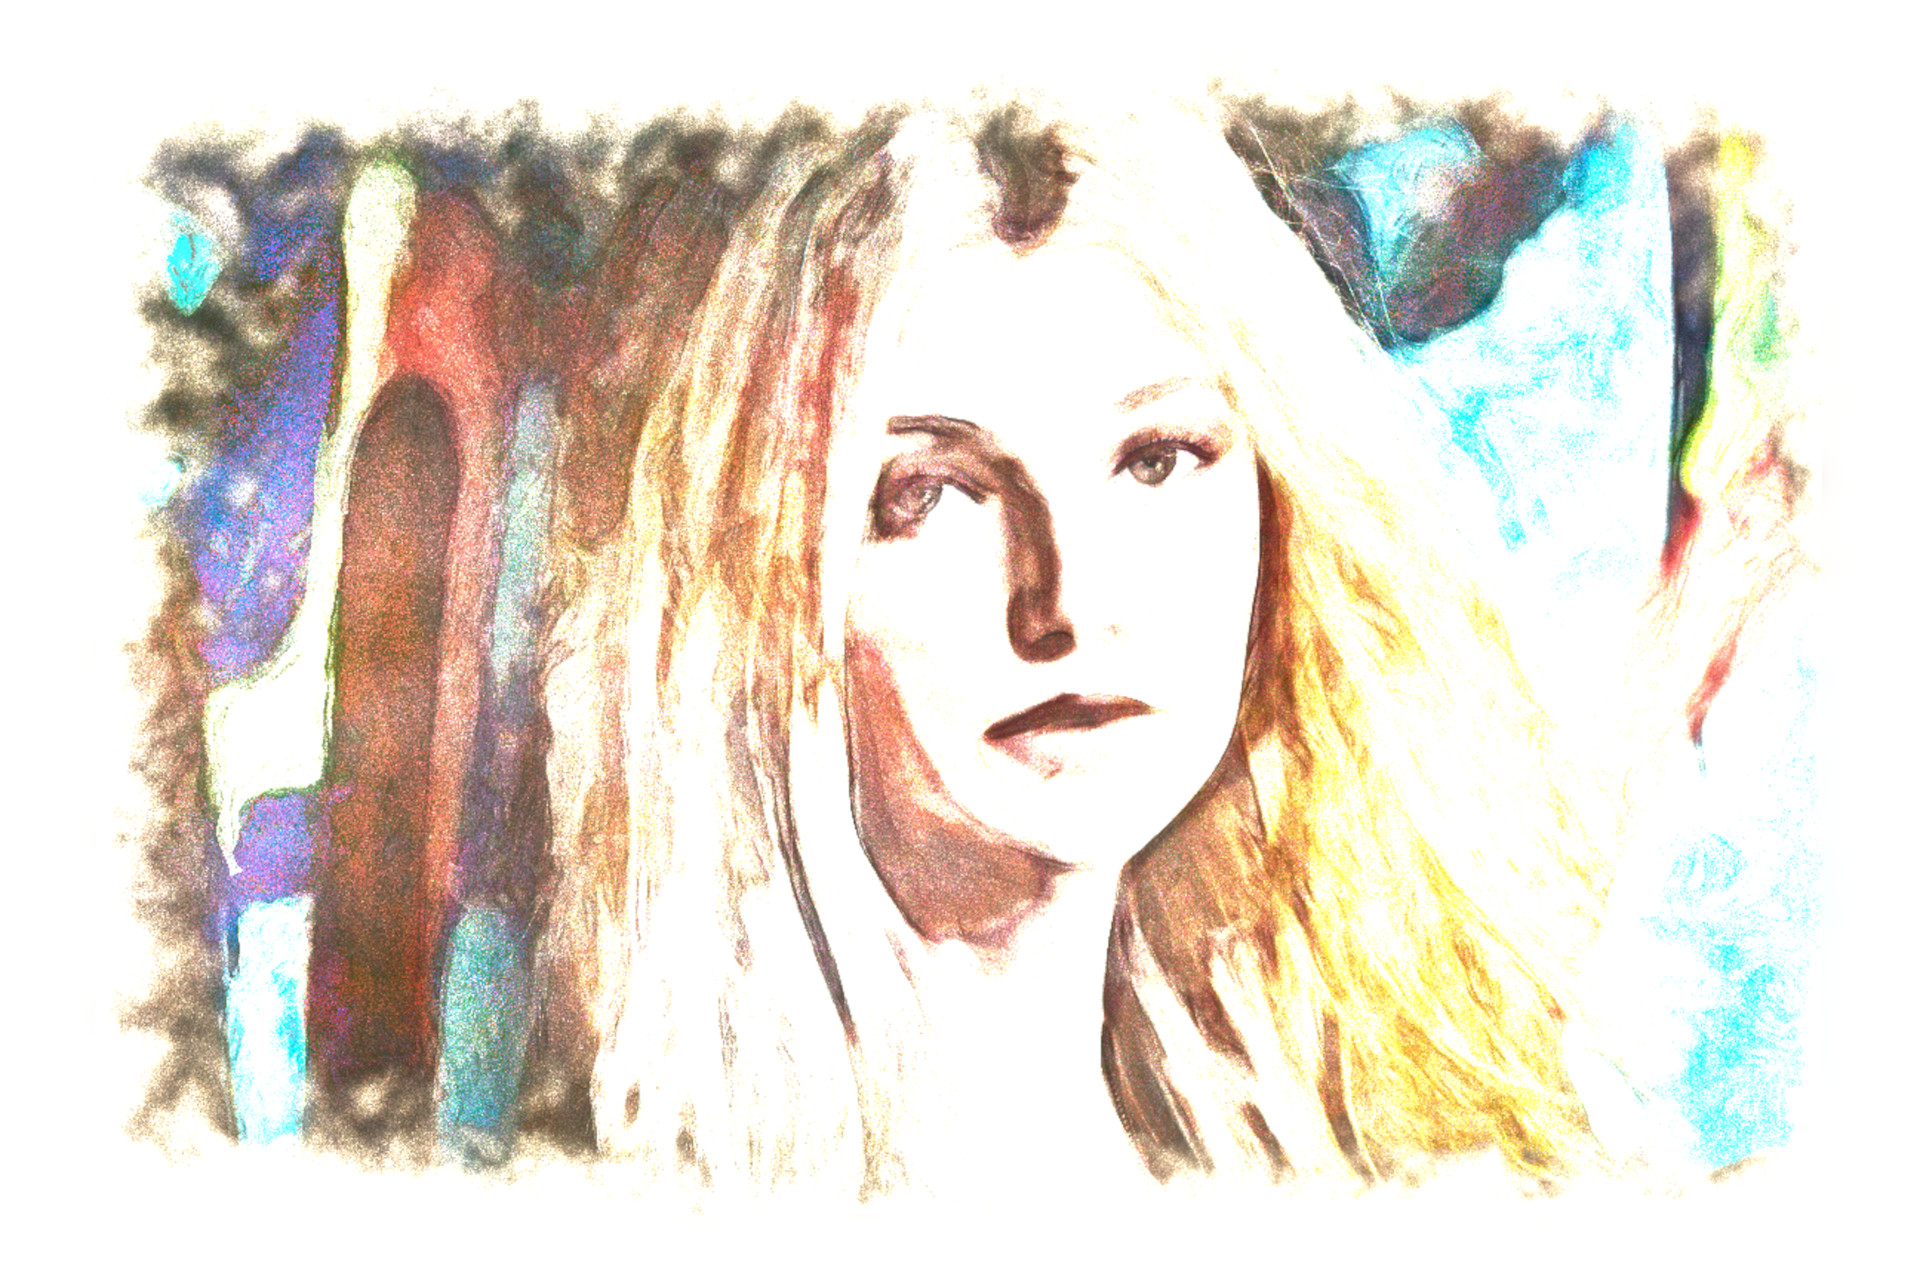 2023-09-29 16-37-36 woman-3990680_1920 with a Watercolor Pastels Effect 2023 (4.0,75.0,32.0,50.0,20.0,8.0,75.0,False,1).jpeg